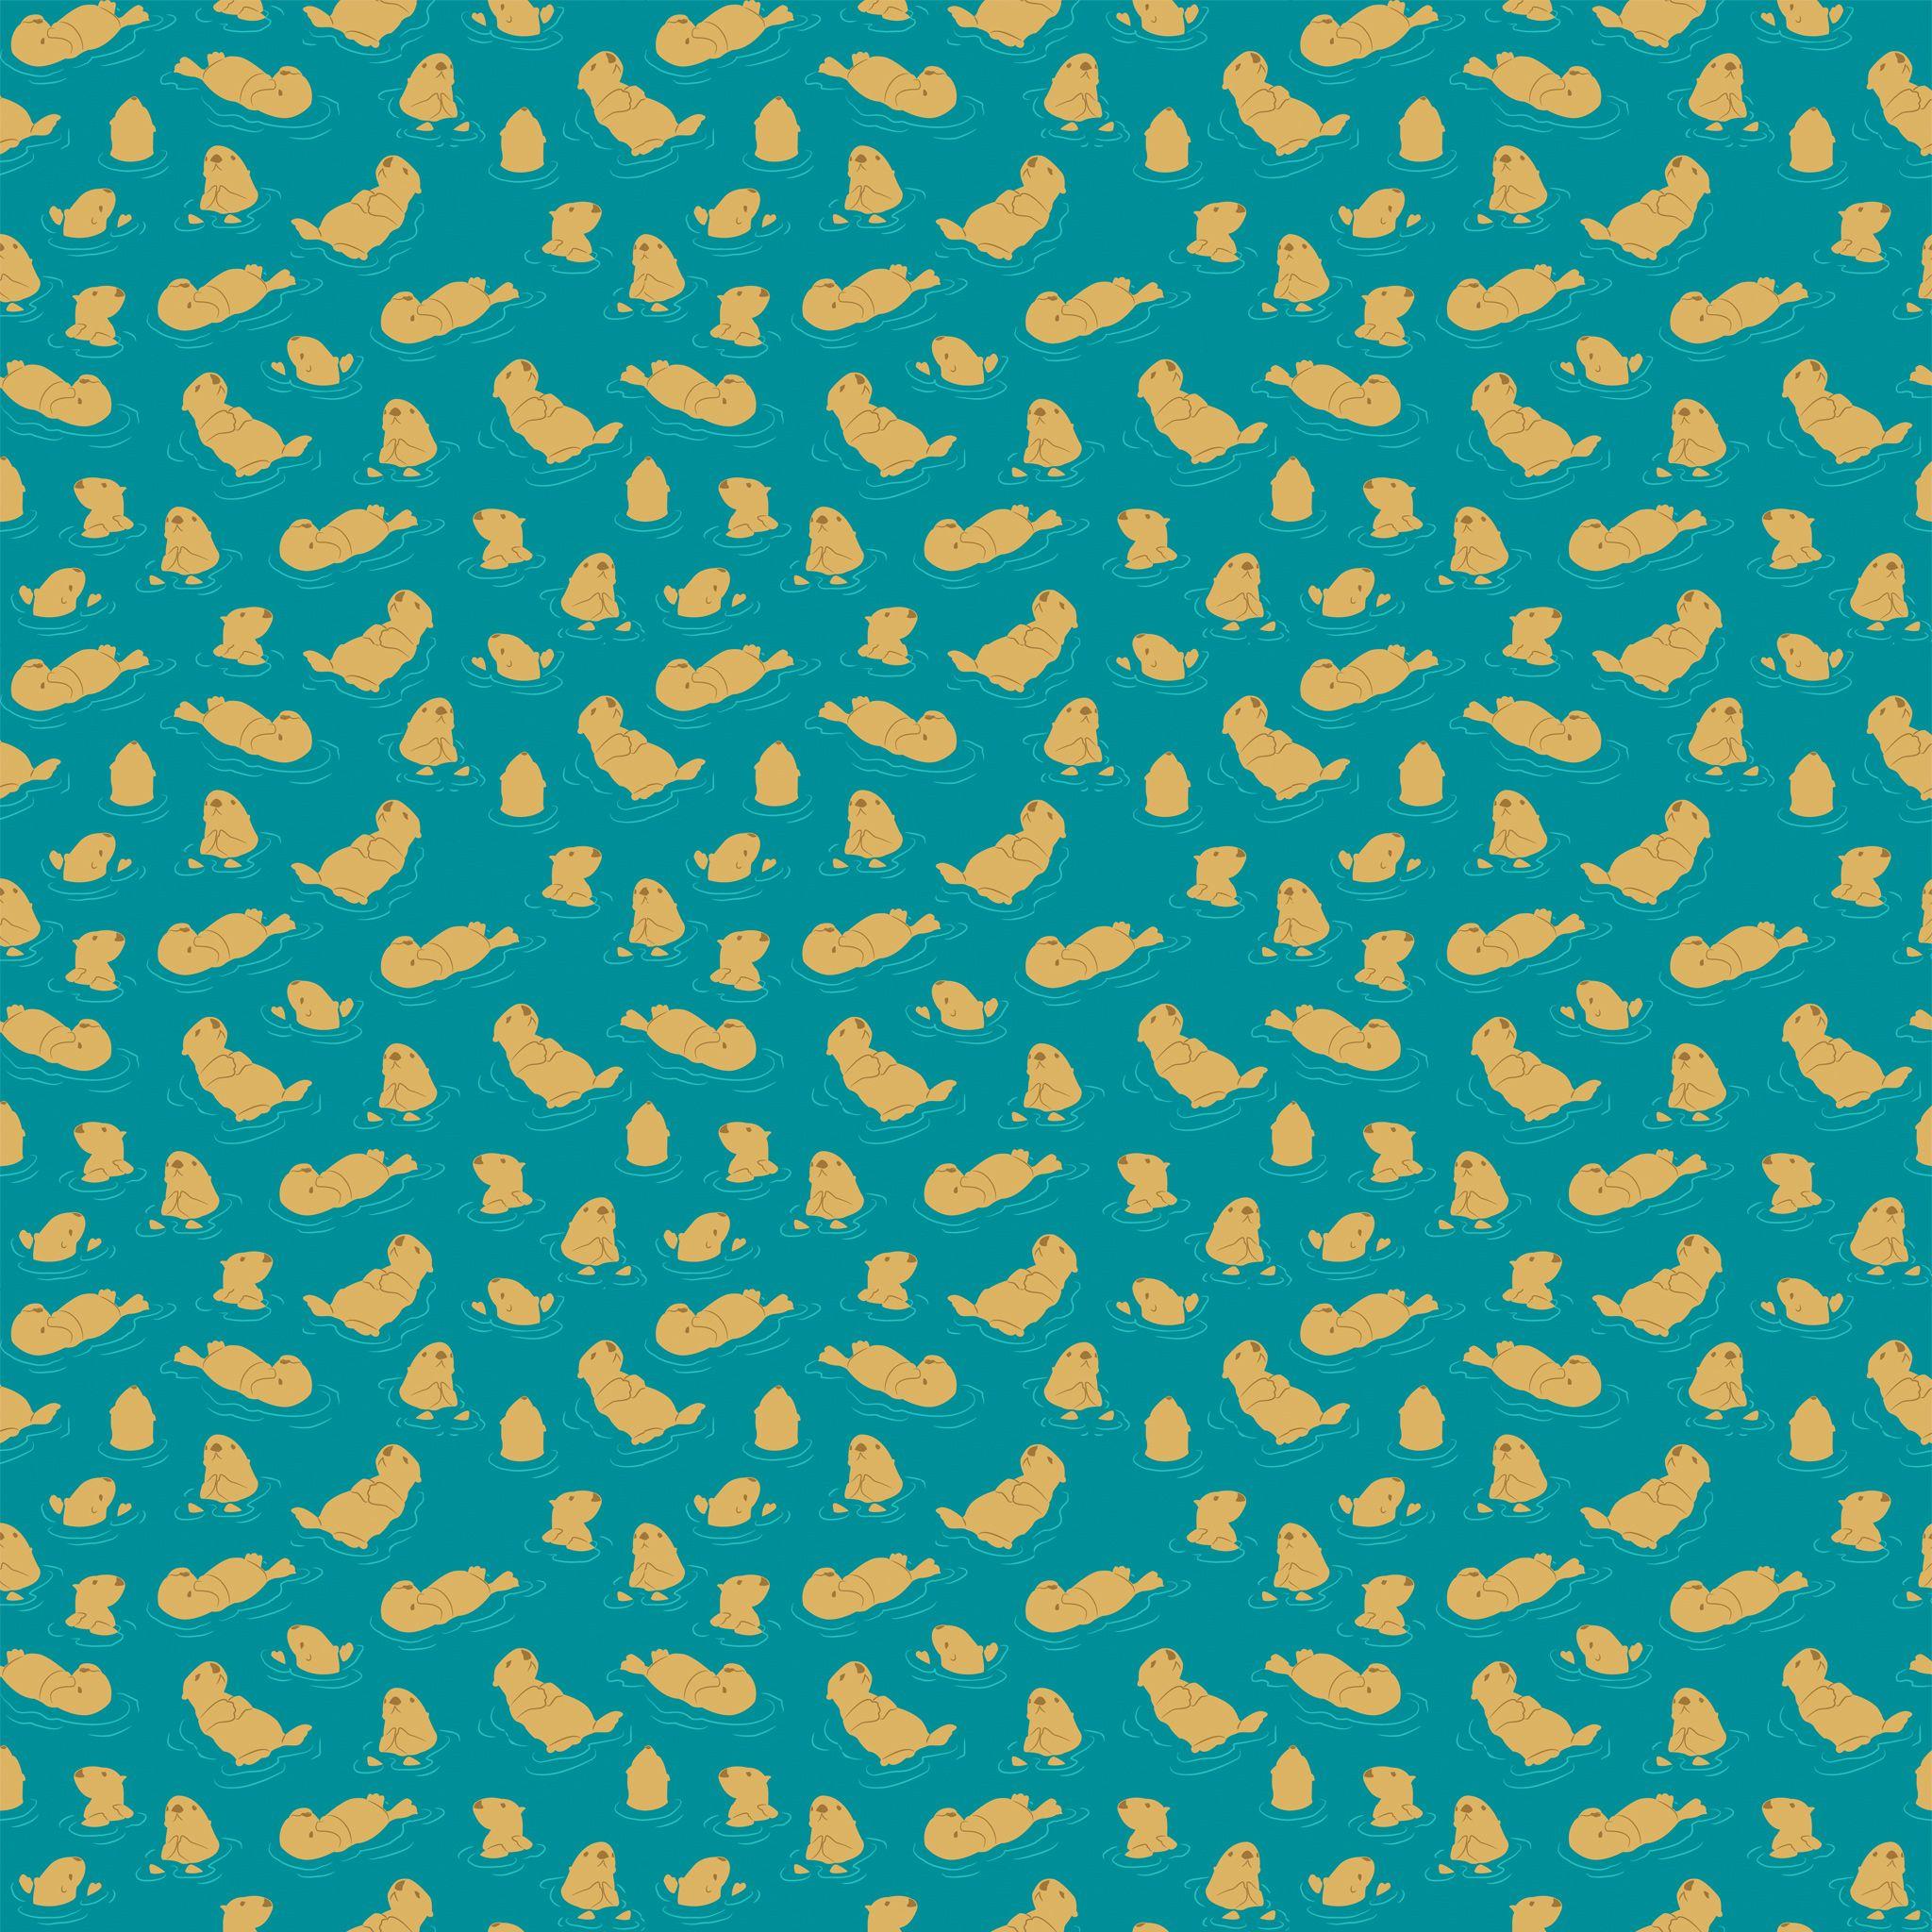 Indie Patterns Wallpaper